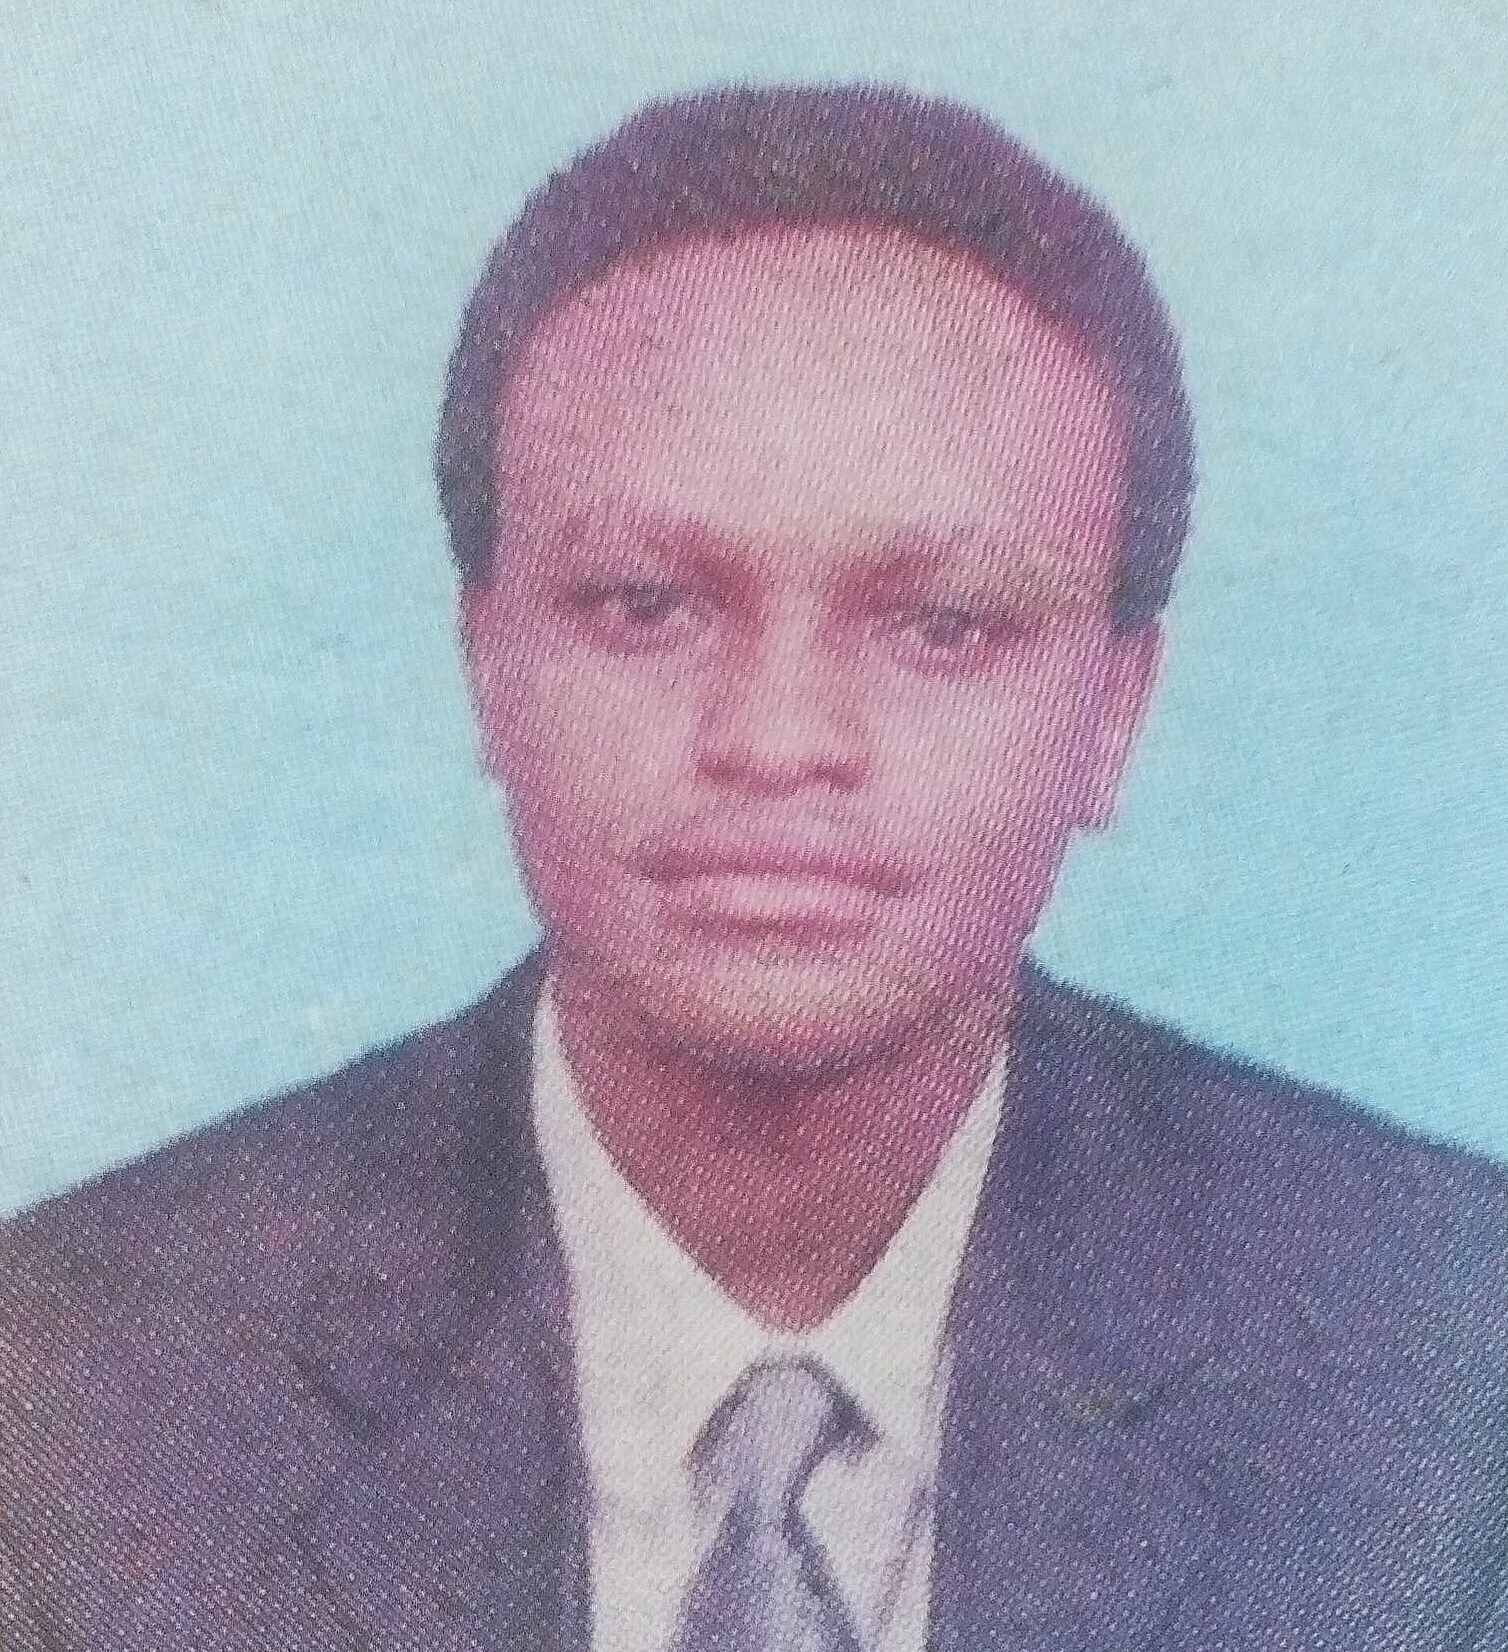 Obituary Image of Amos Ndua Ndolo